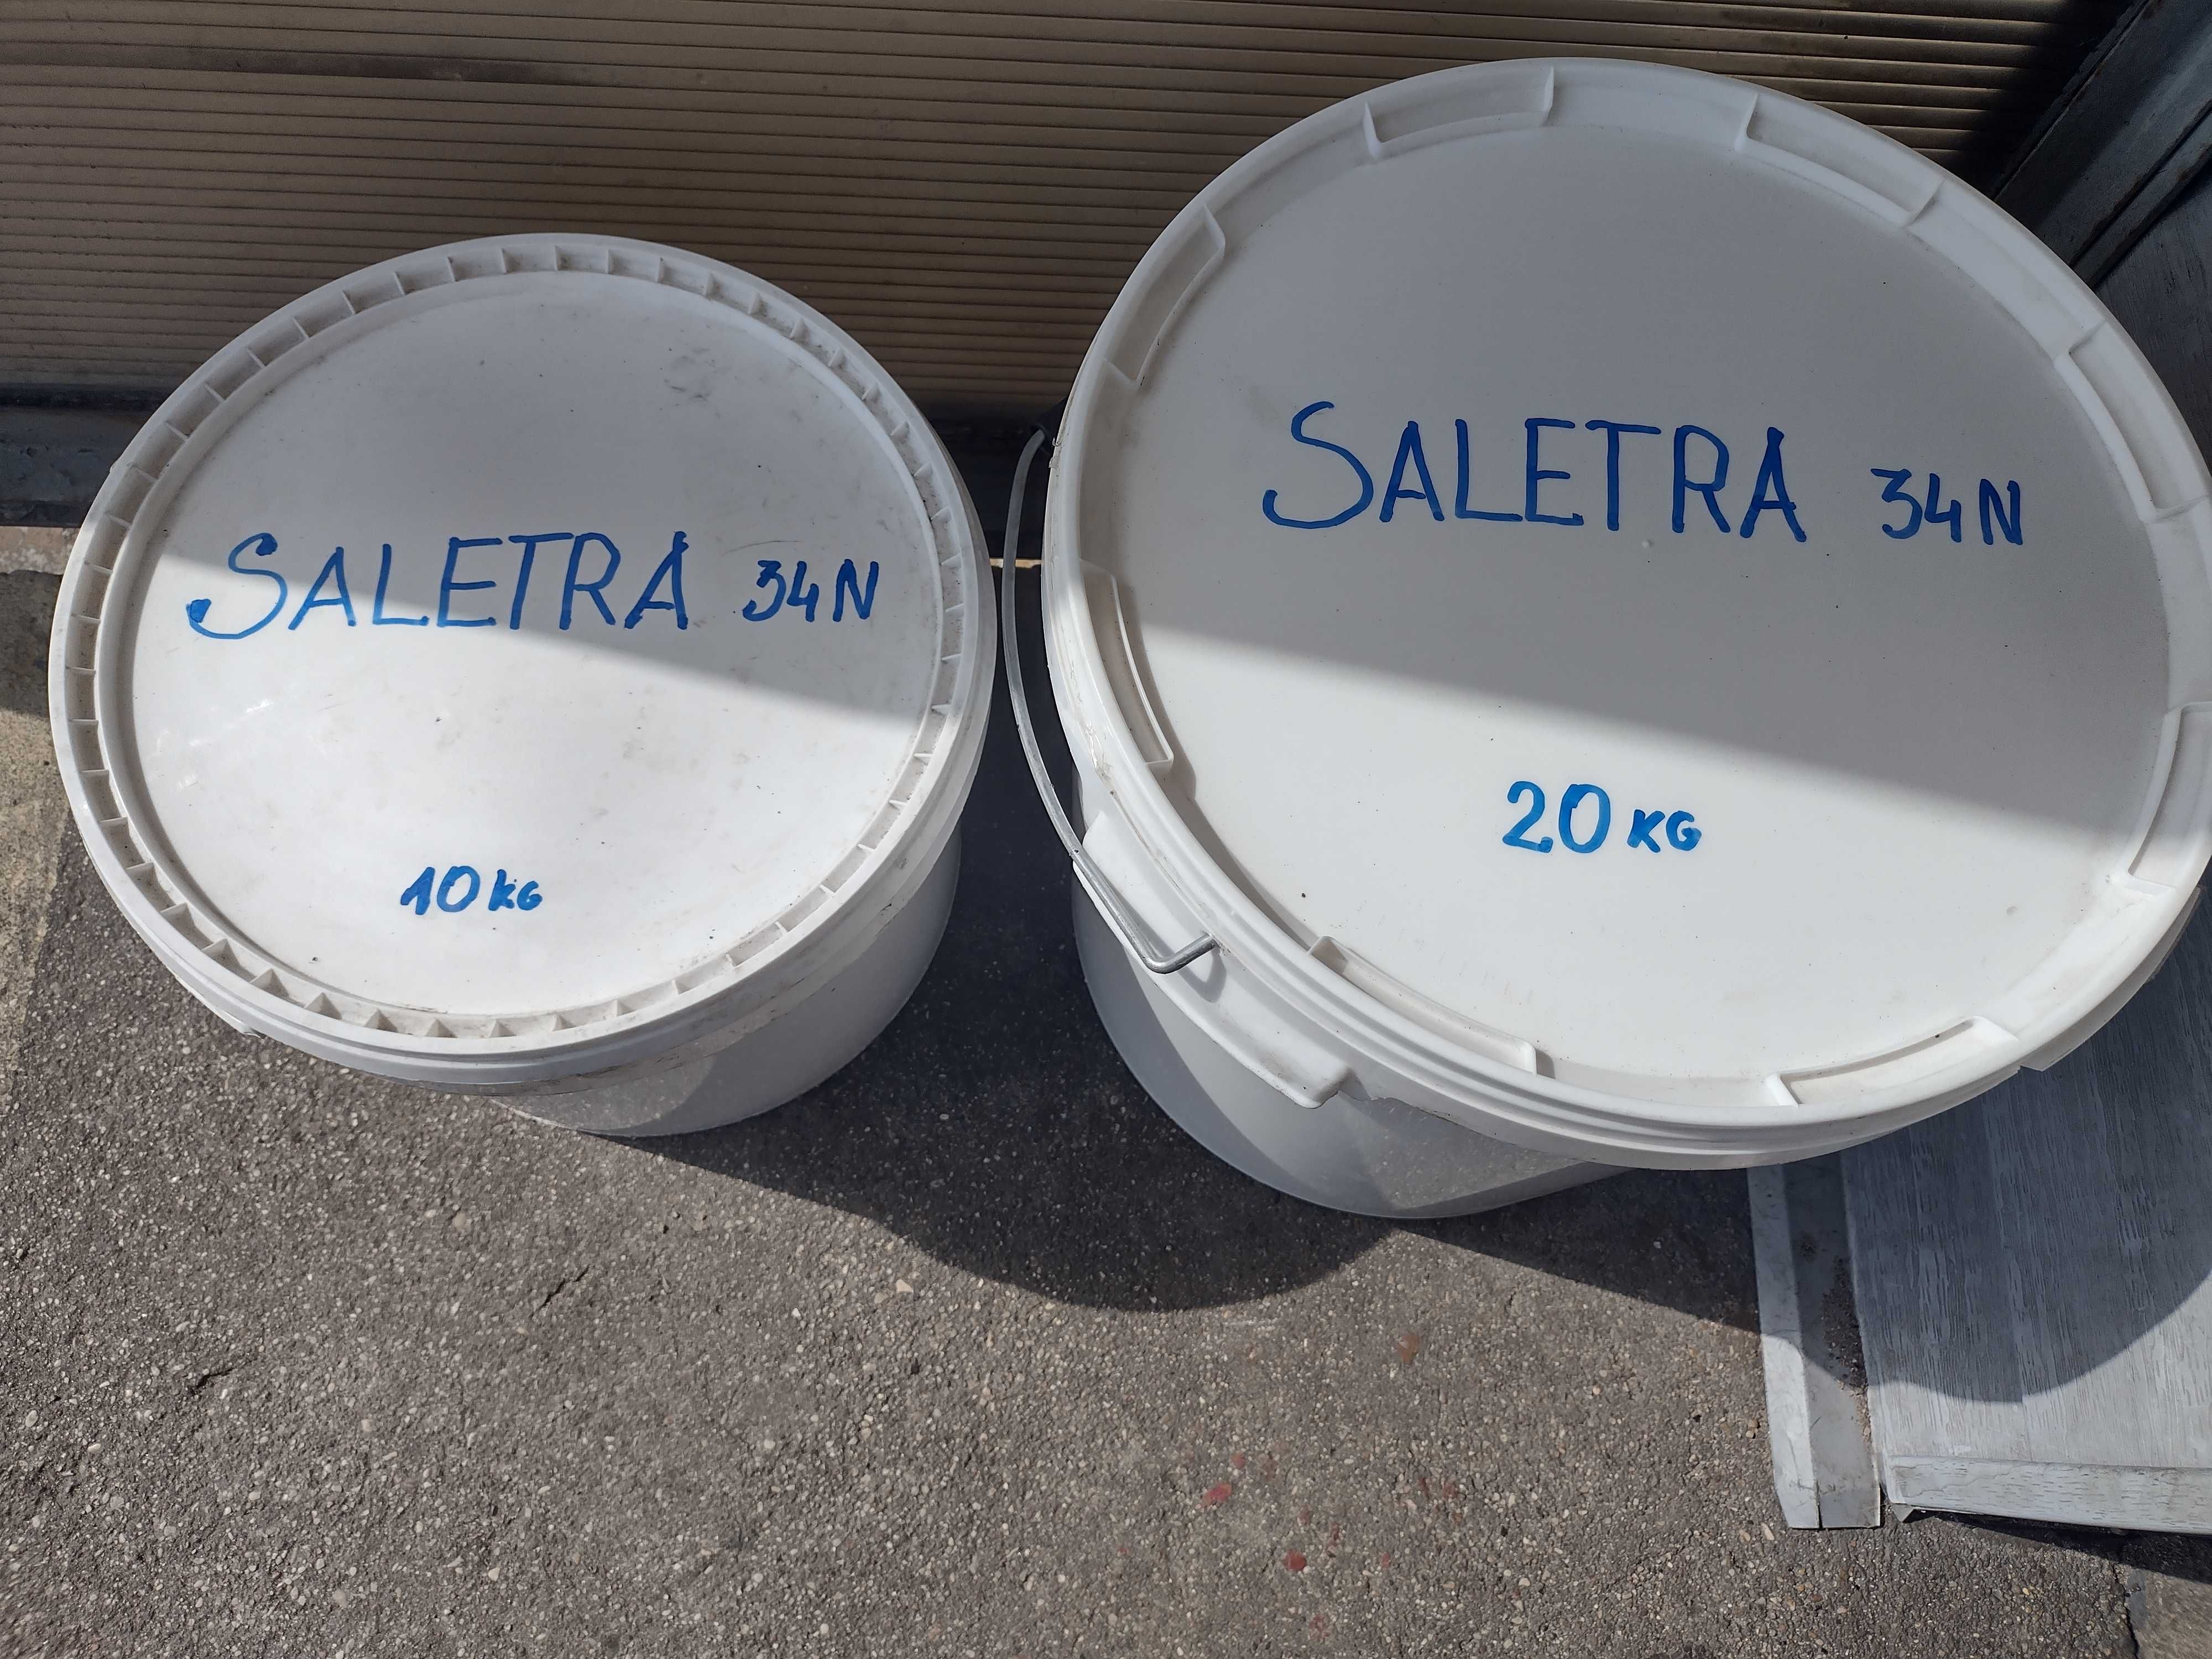 Saletra amonowa (34,4N) na KG lub w wiaderkach